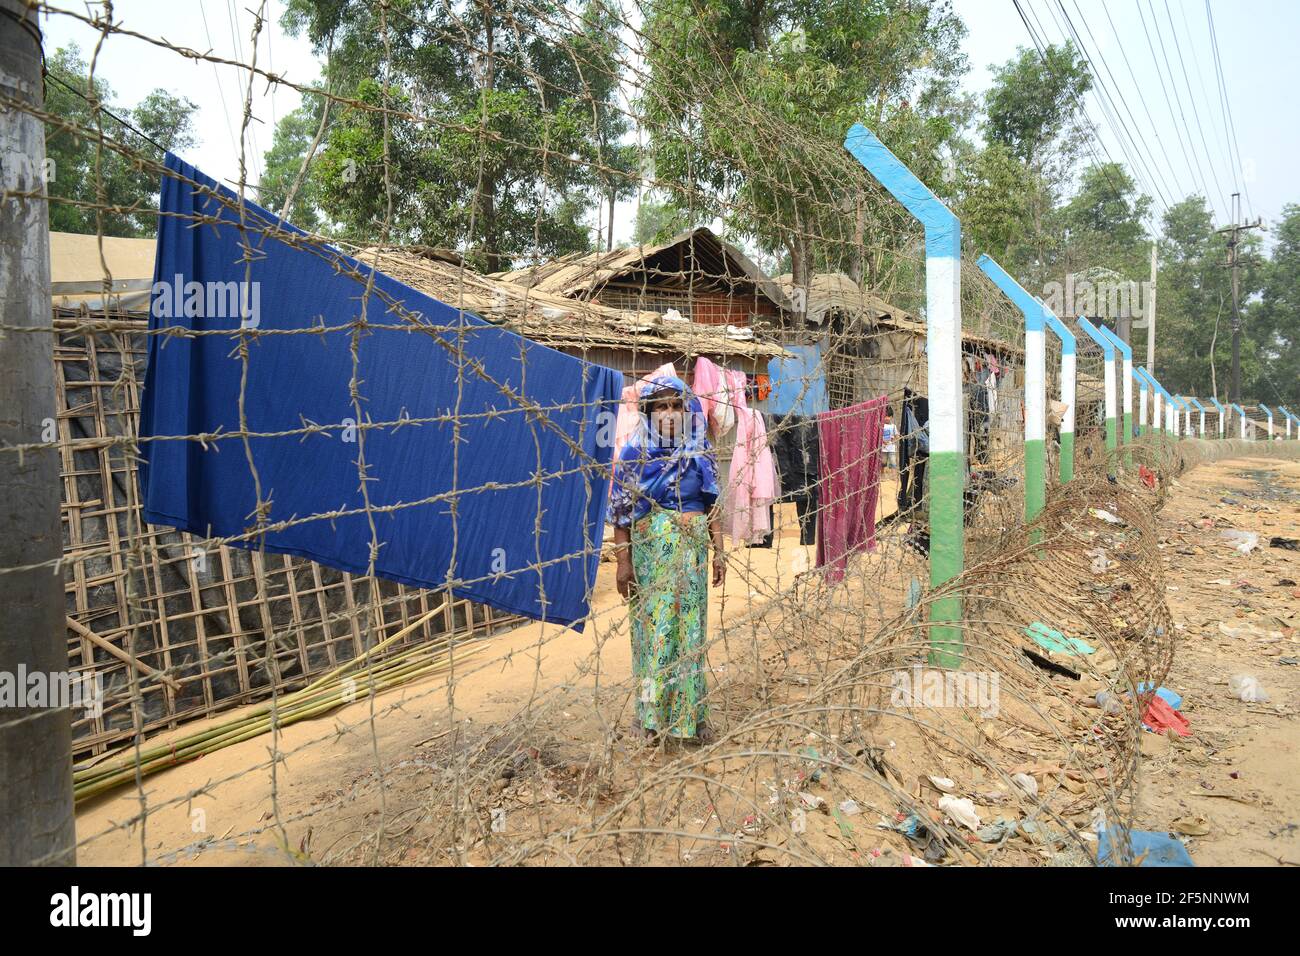 Bangladesh defends use of fences after deadly Rohingya camp fire at Ukhia rohingya refugees camp at Cox'x Bazar, Bangladesh. International humanitaria Stock Photo